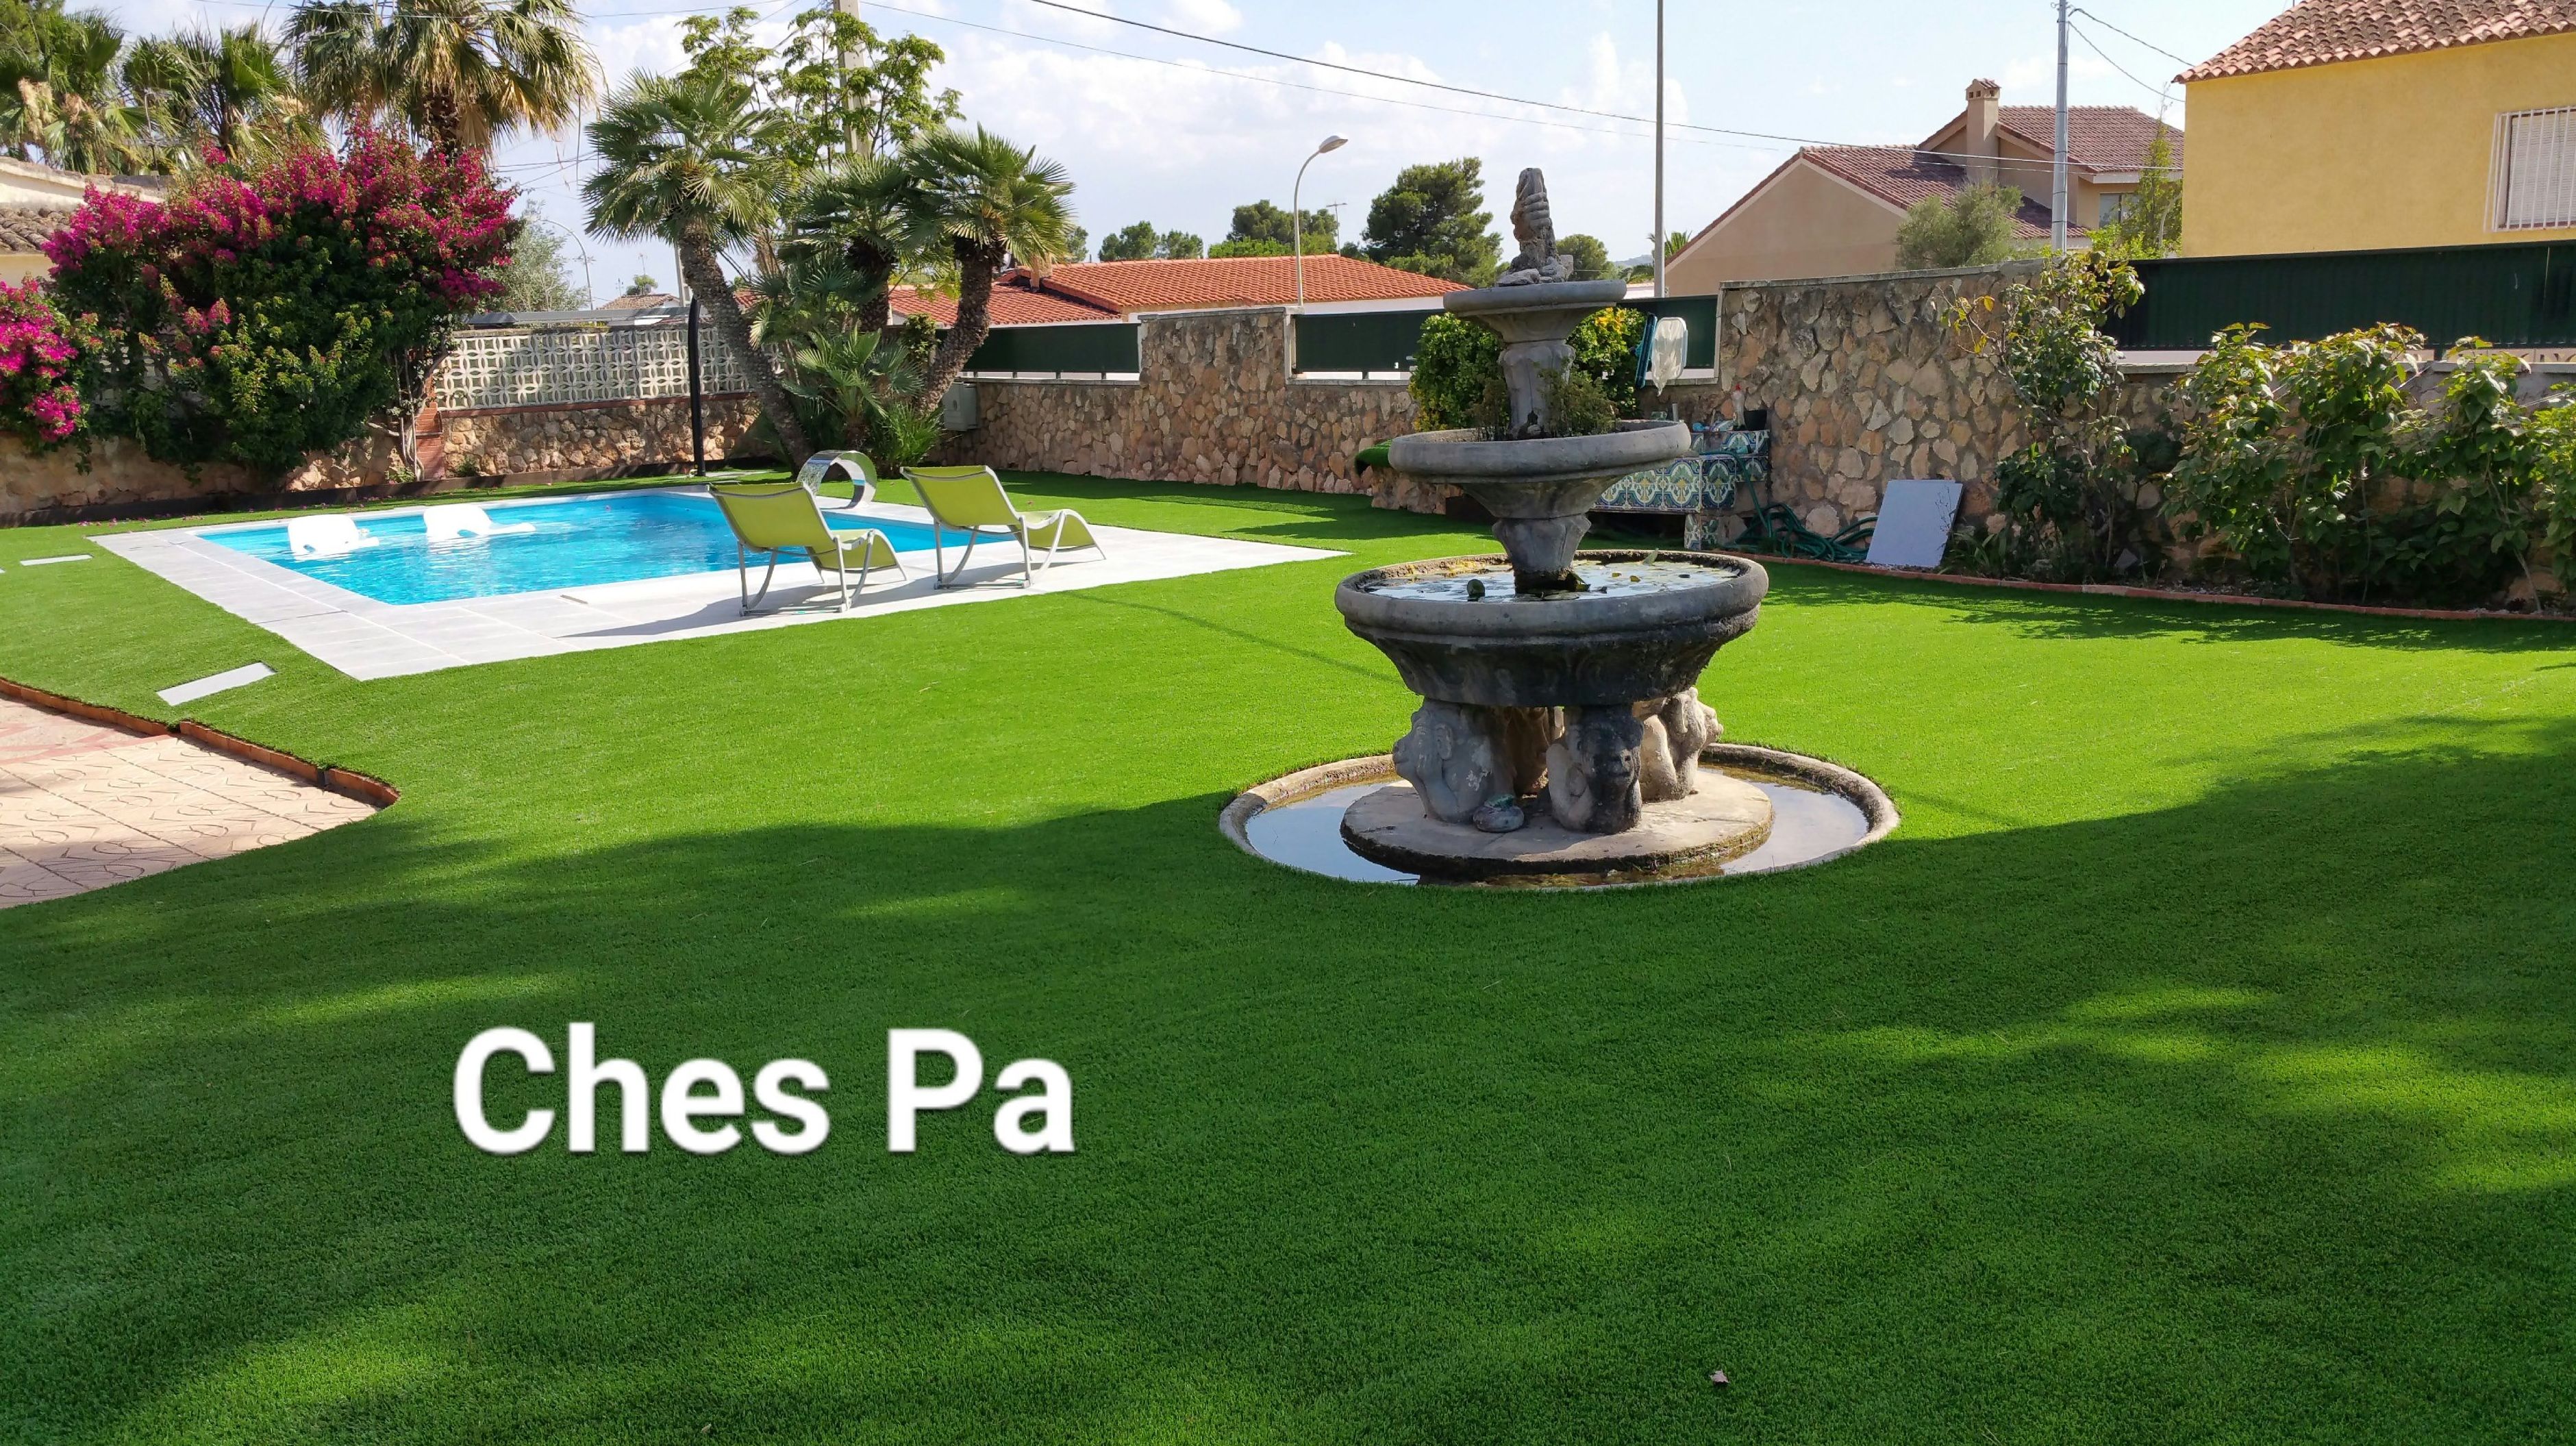 Proyecto Ches Pa en jardín particular